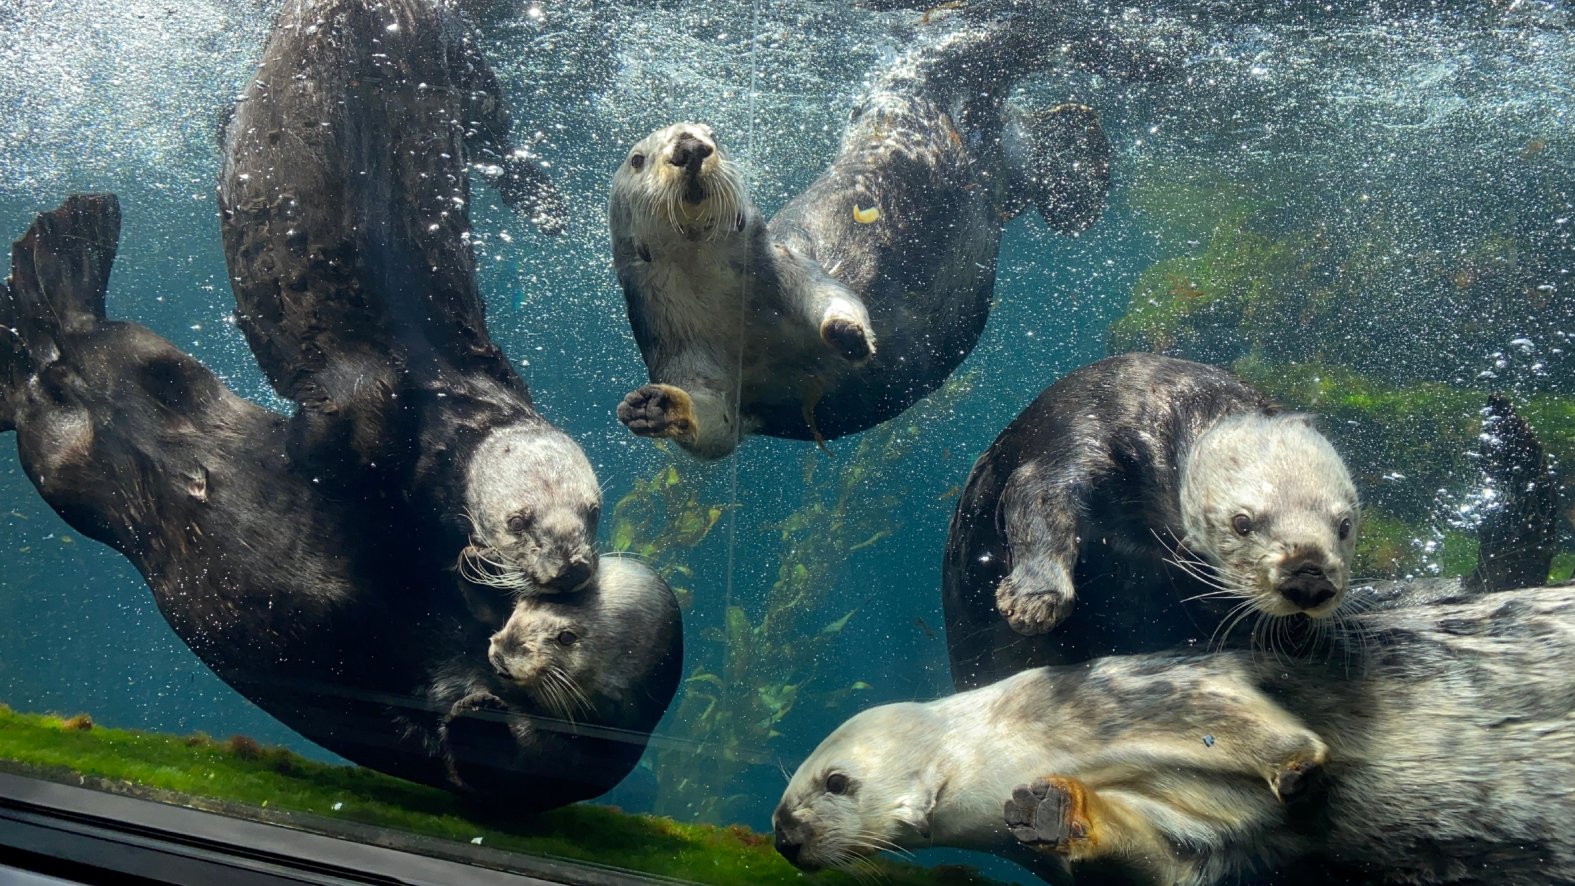 Monterey Bay Aquarium Cutely Fêtes Its ‘Favorite Things’ NBC Los Angeles